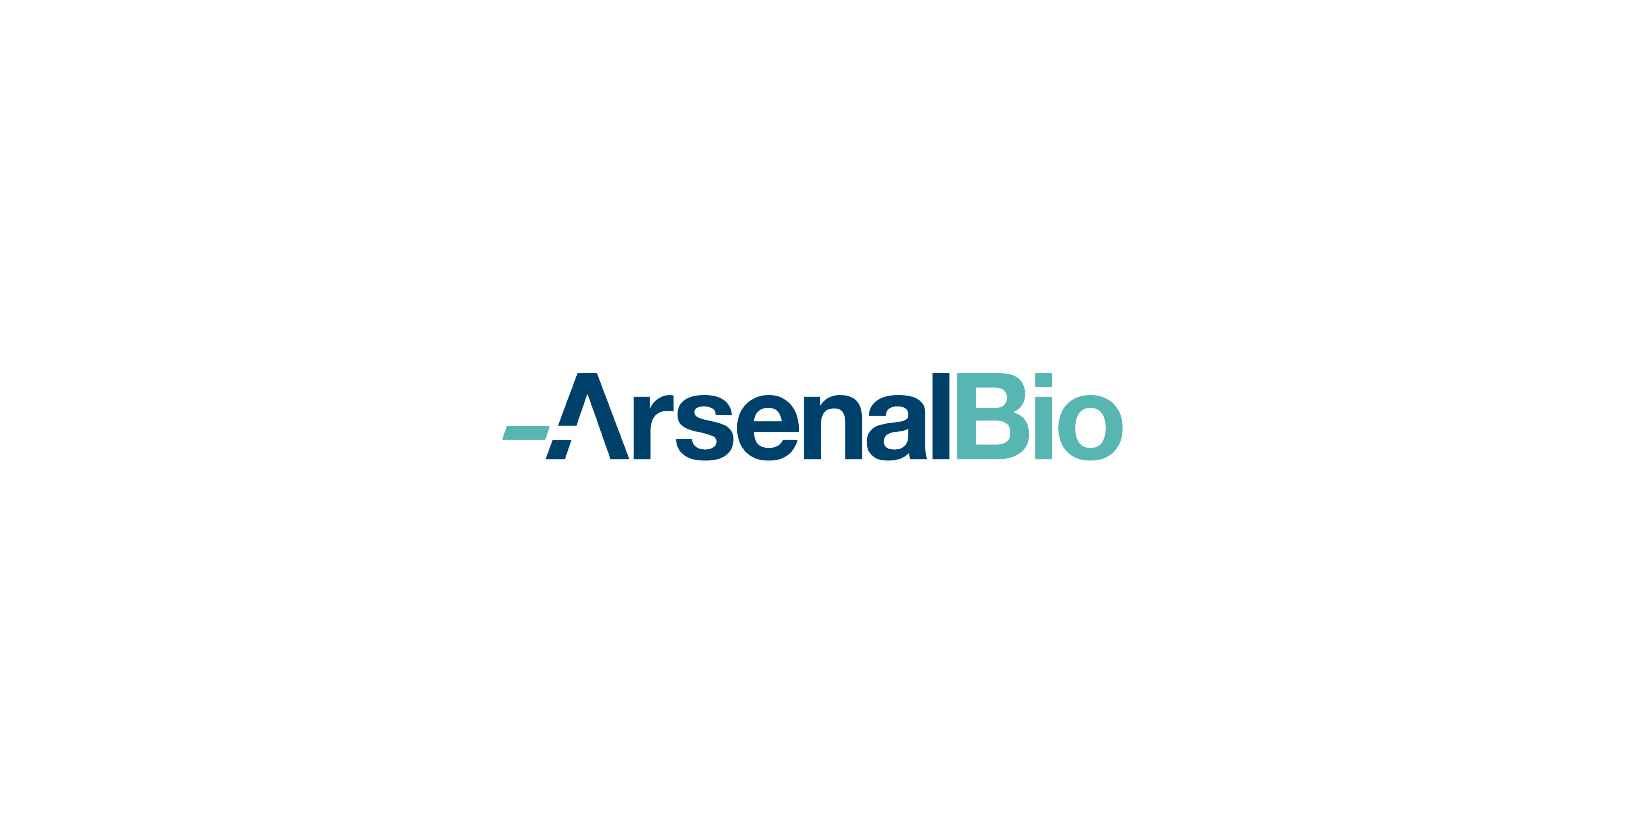 Vision Fund portfolio company Arsenal Bio's logo